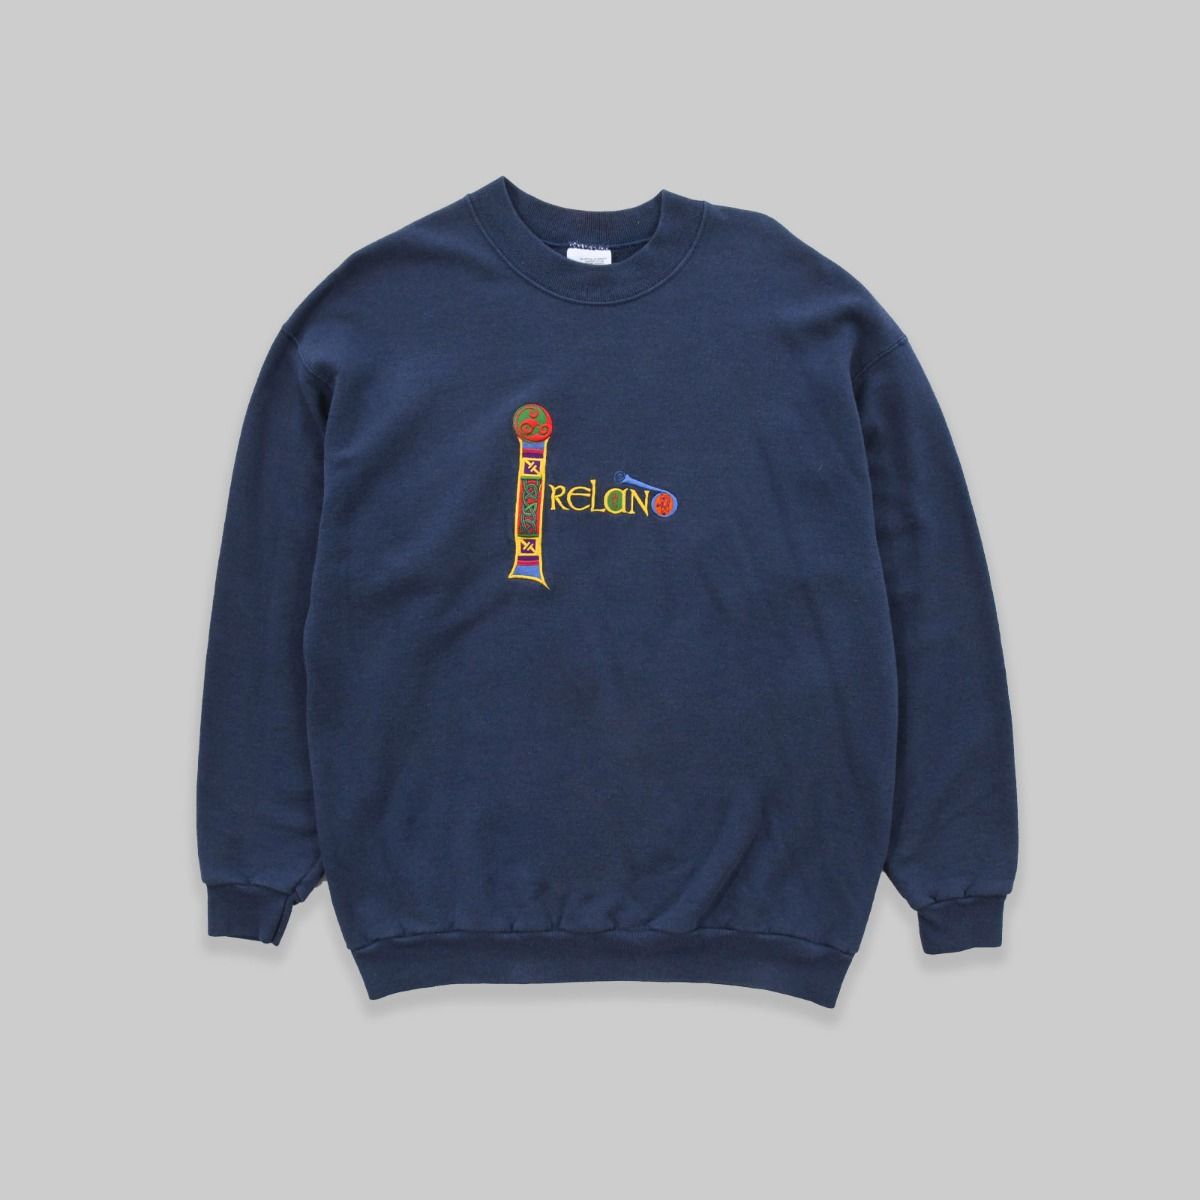 Ireland 1990s Sweatshirt